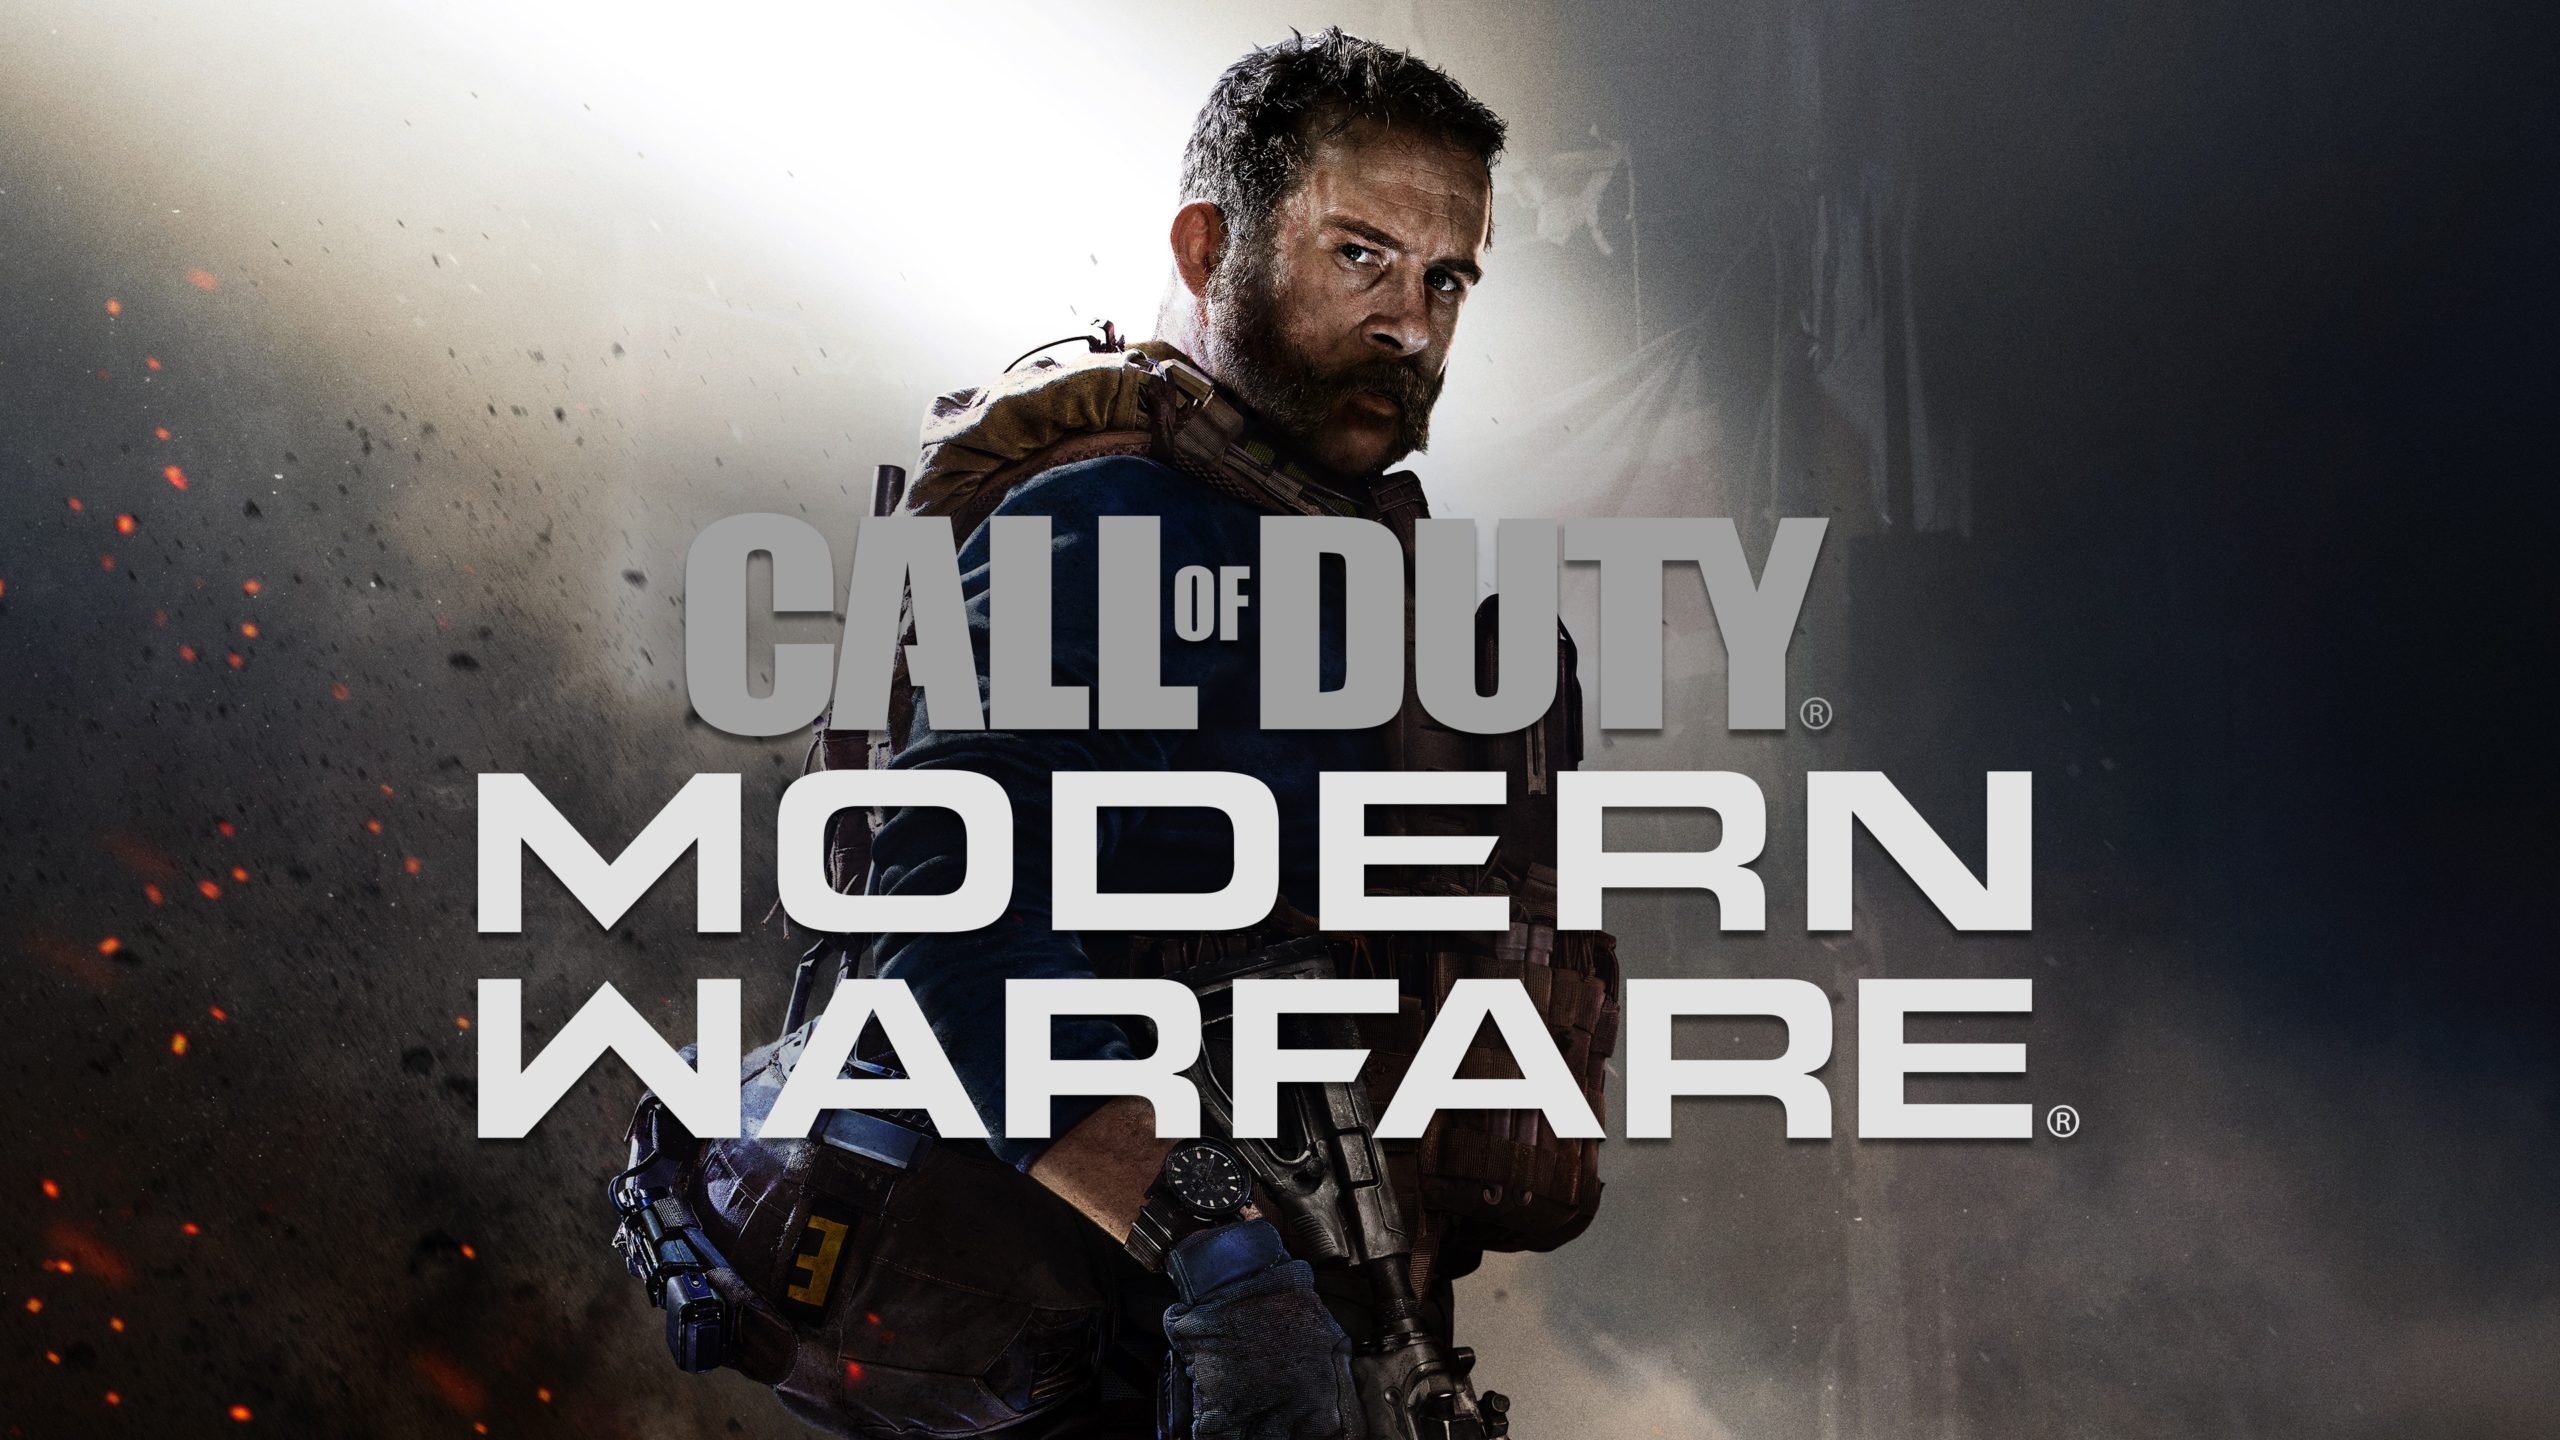 Activision Call of Duty Modern Warfare